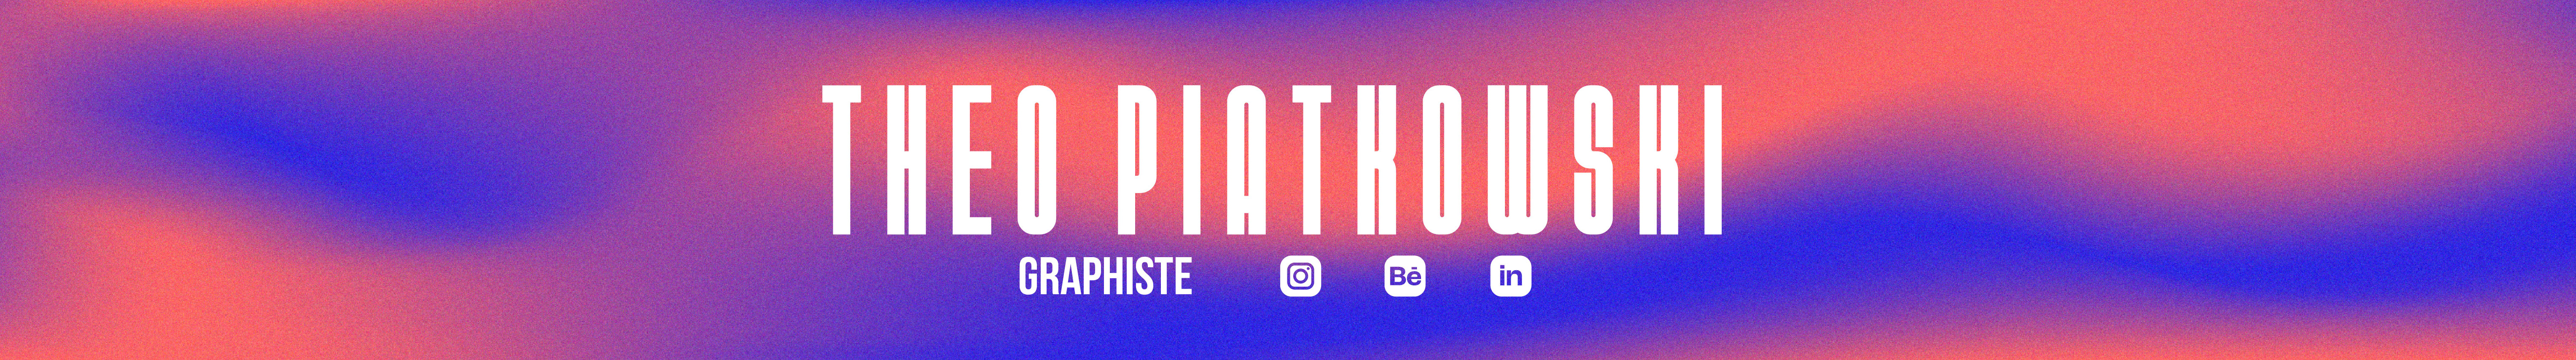 Theo Piatkowski's profile banner